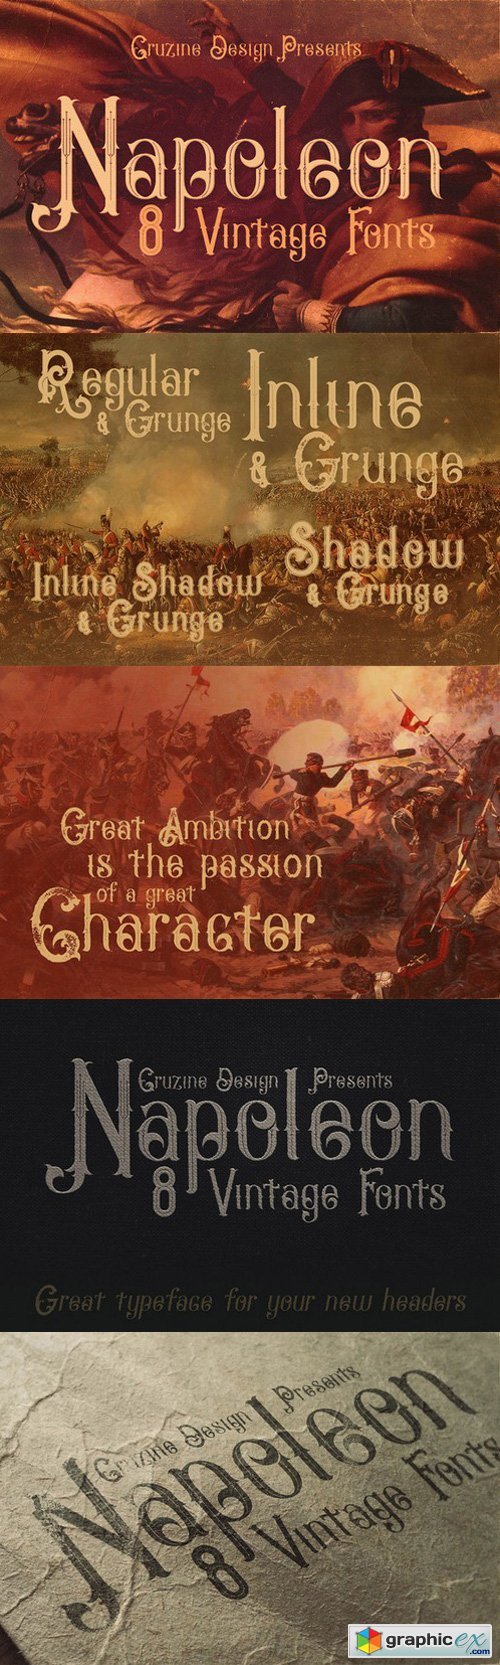 Napoleon Vintage Typeface